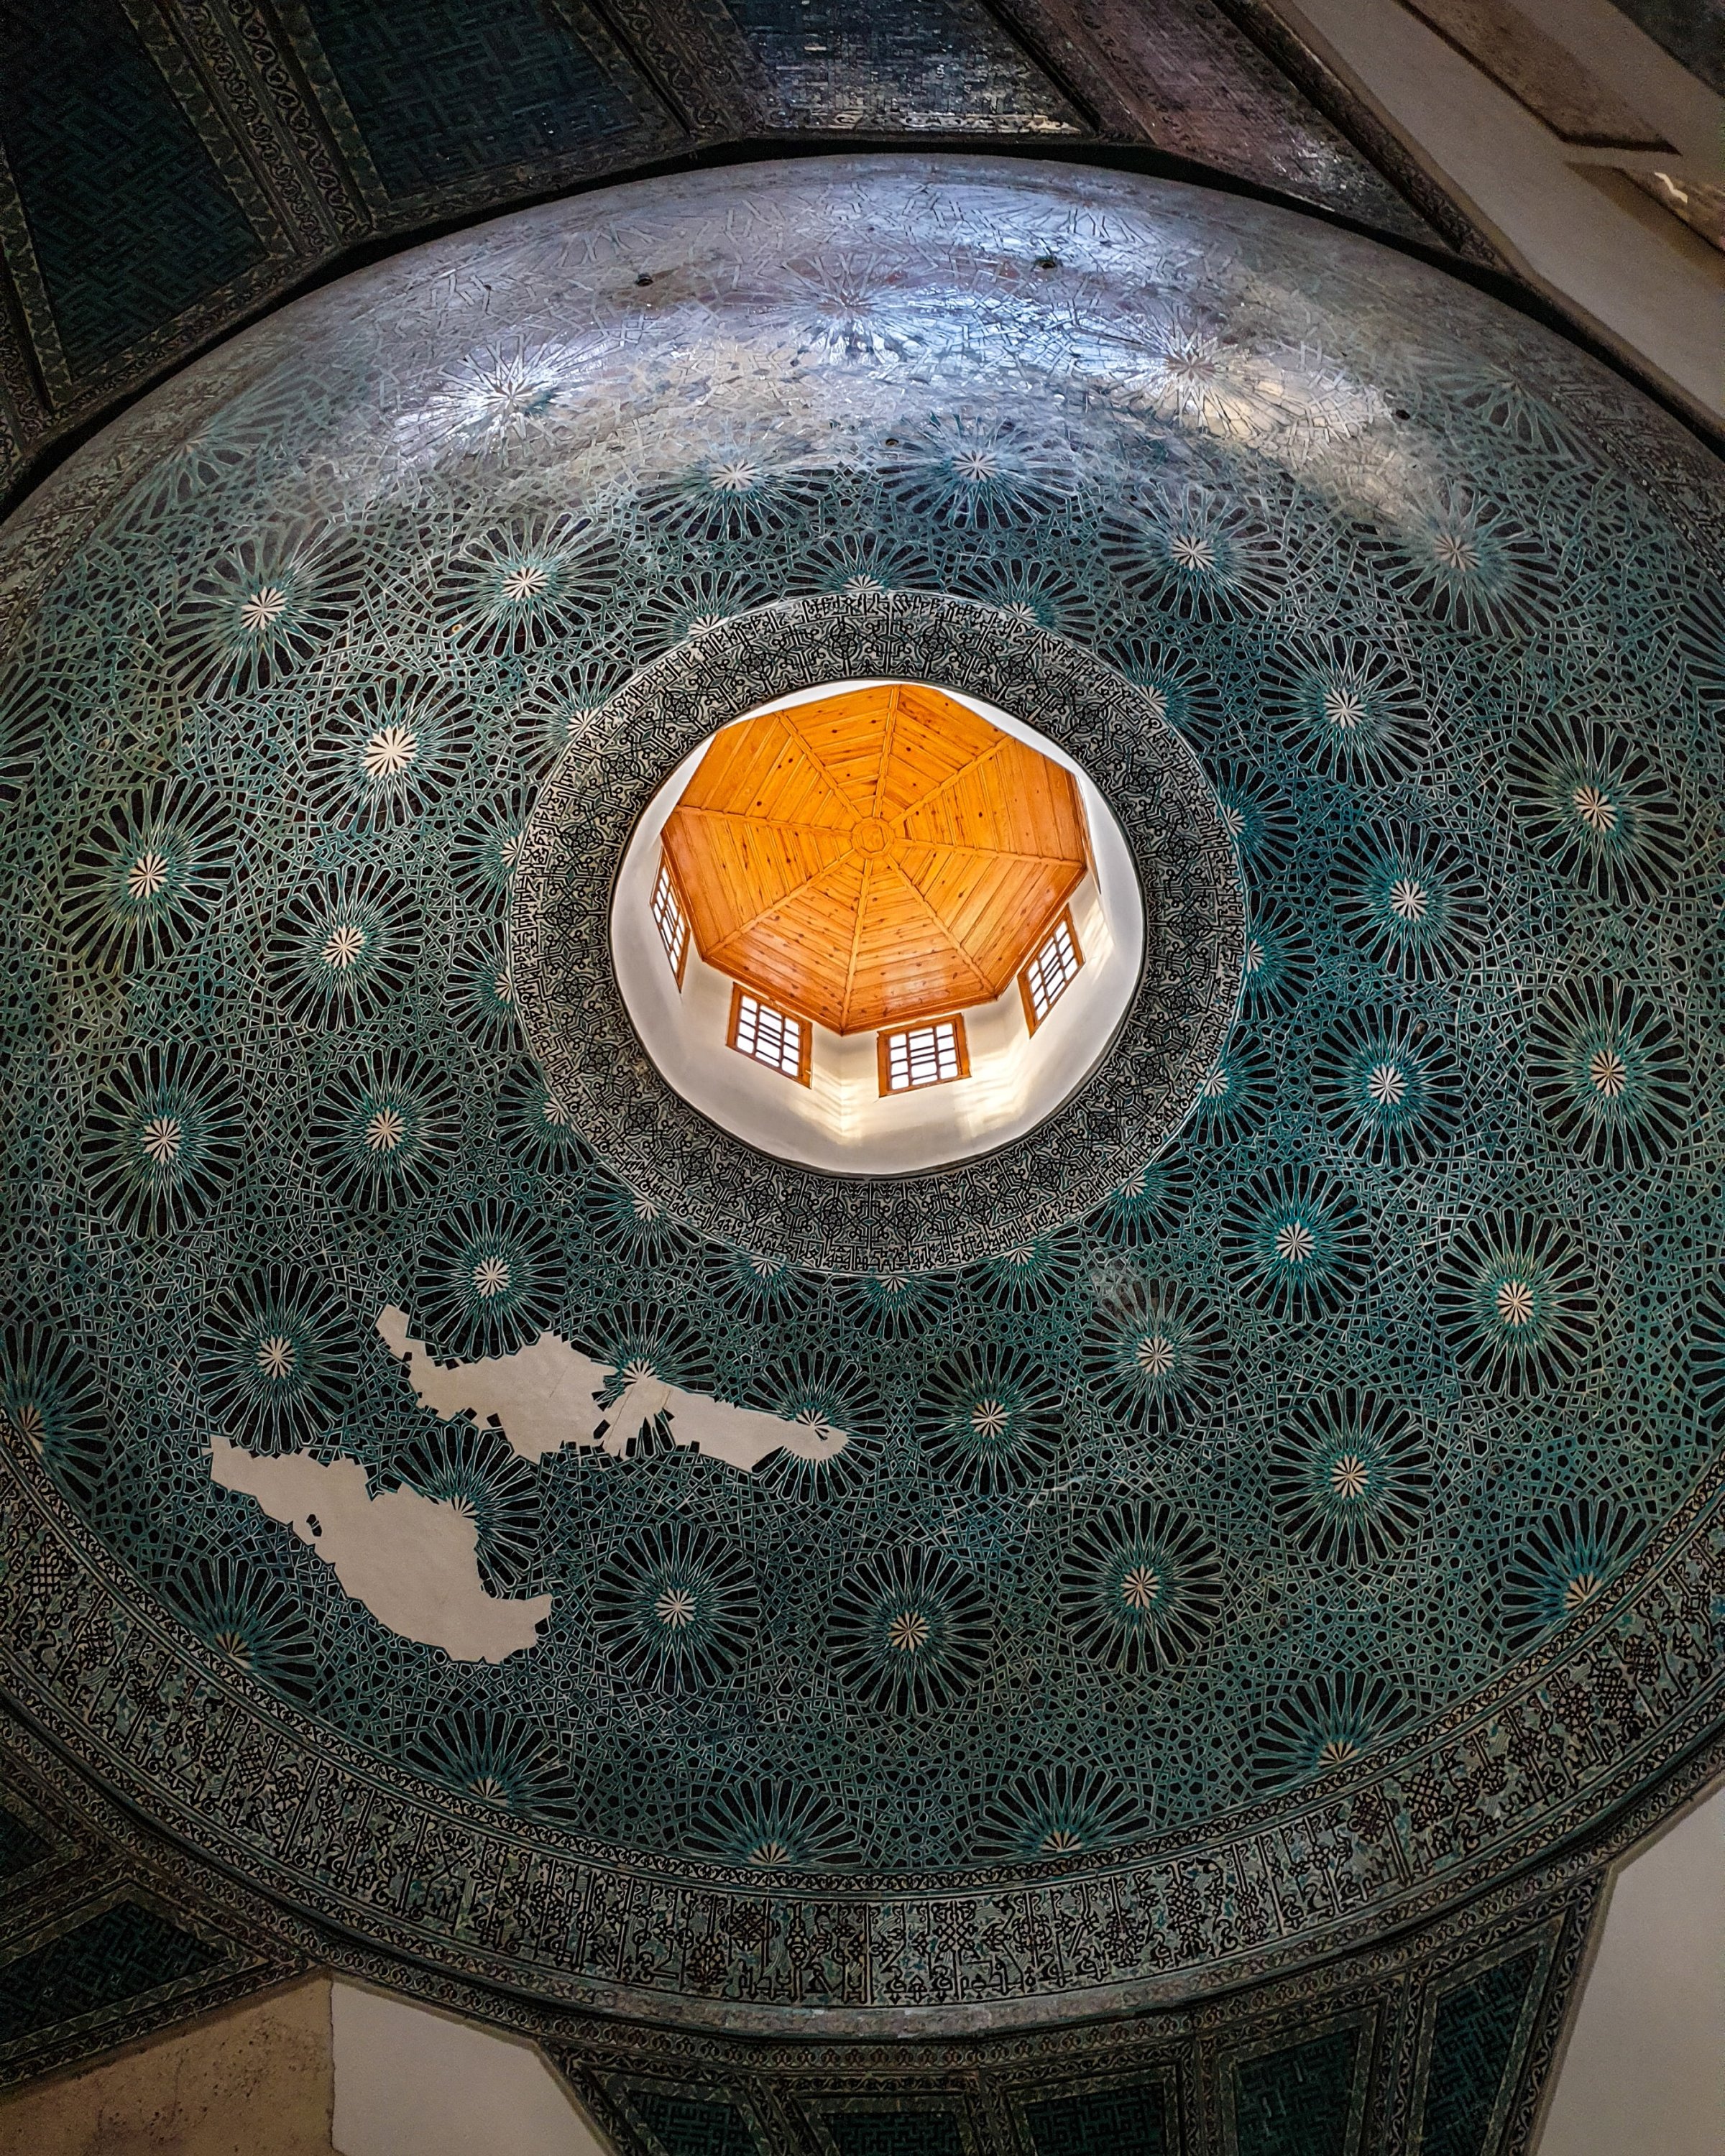 The ceiling of Karatay Madrassa. (Photo by Argun Konuk)